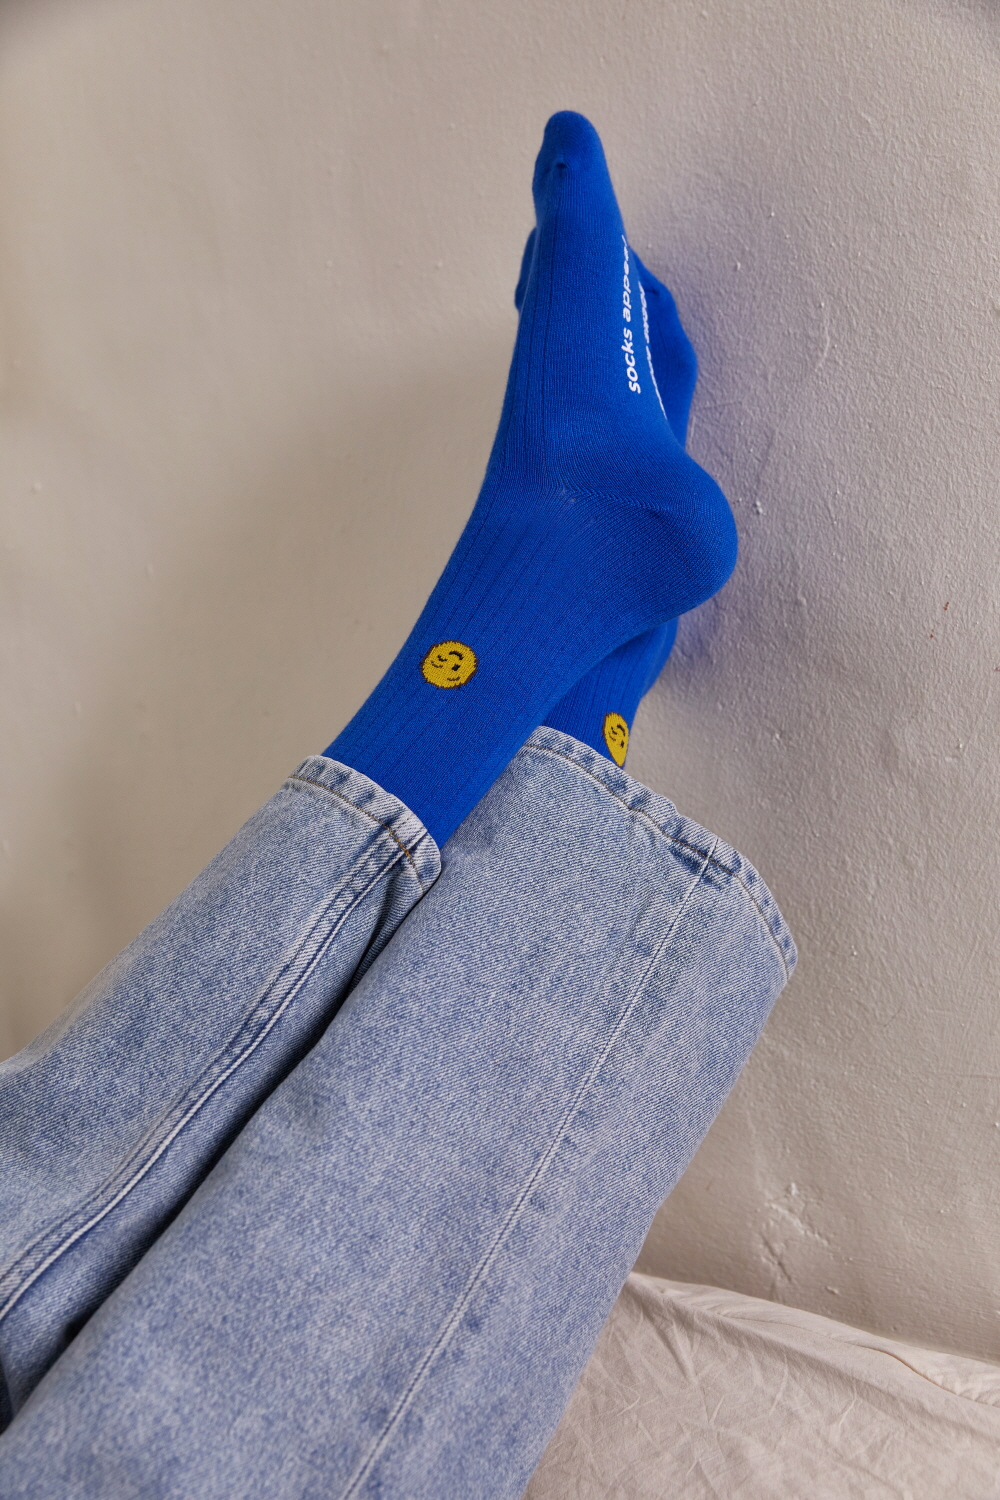 socks detail image-S2L1